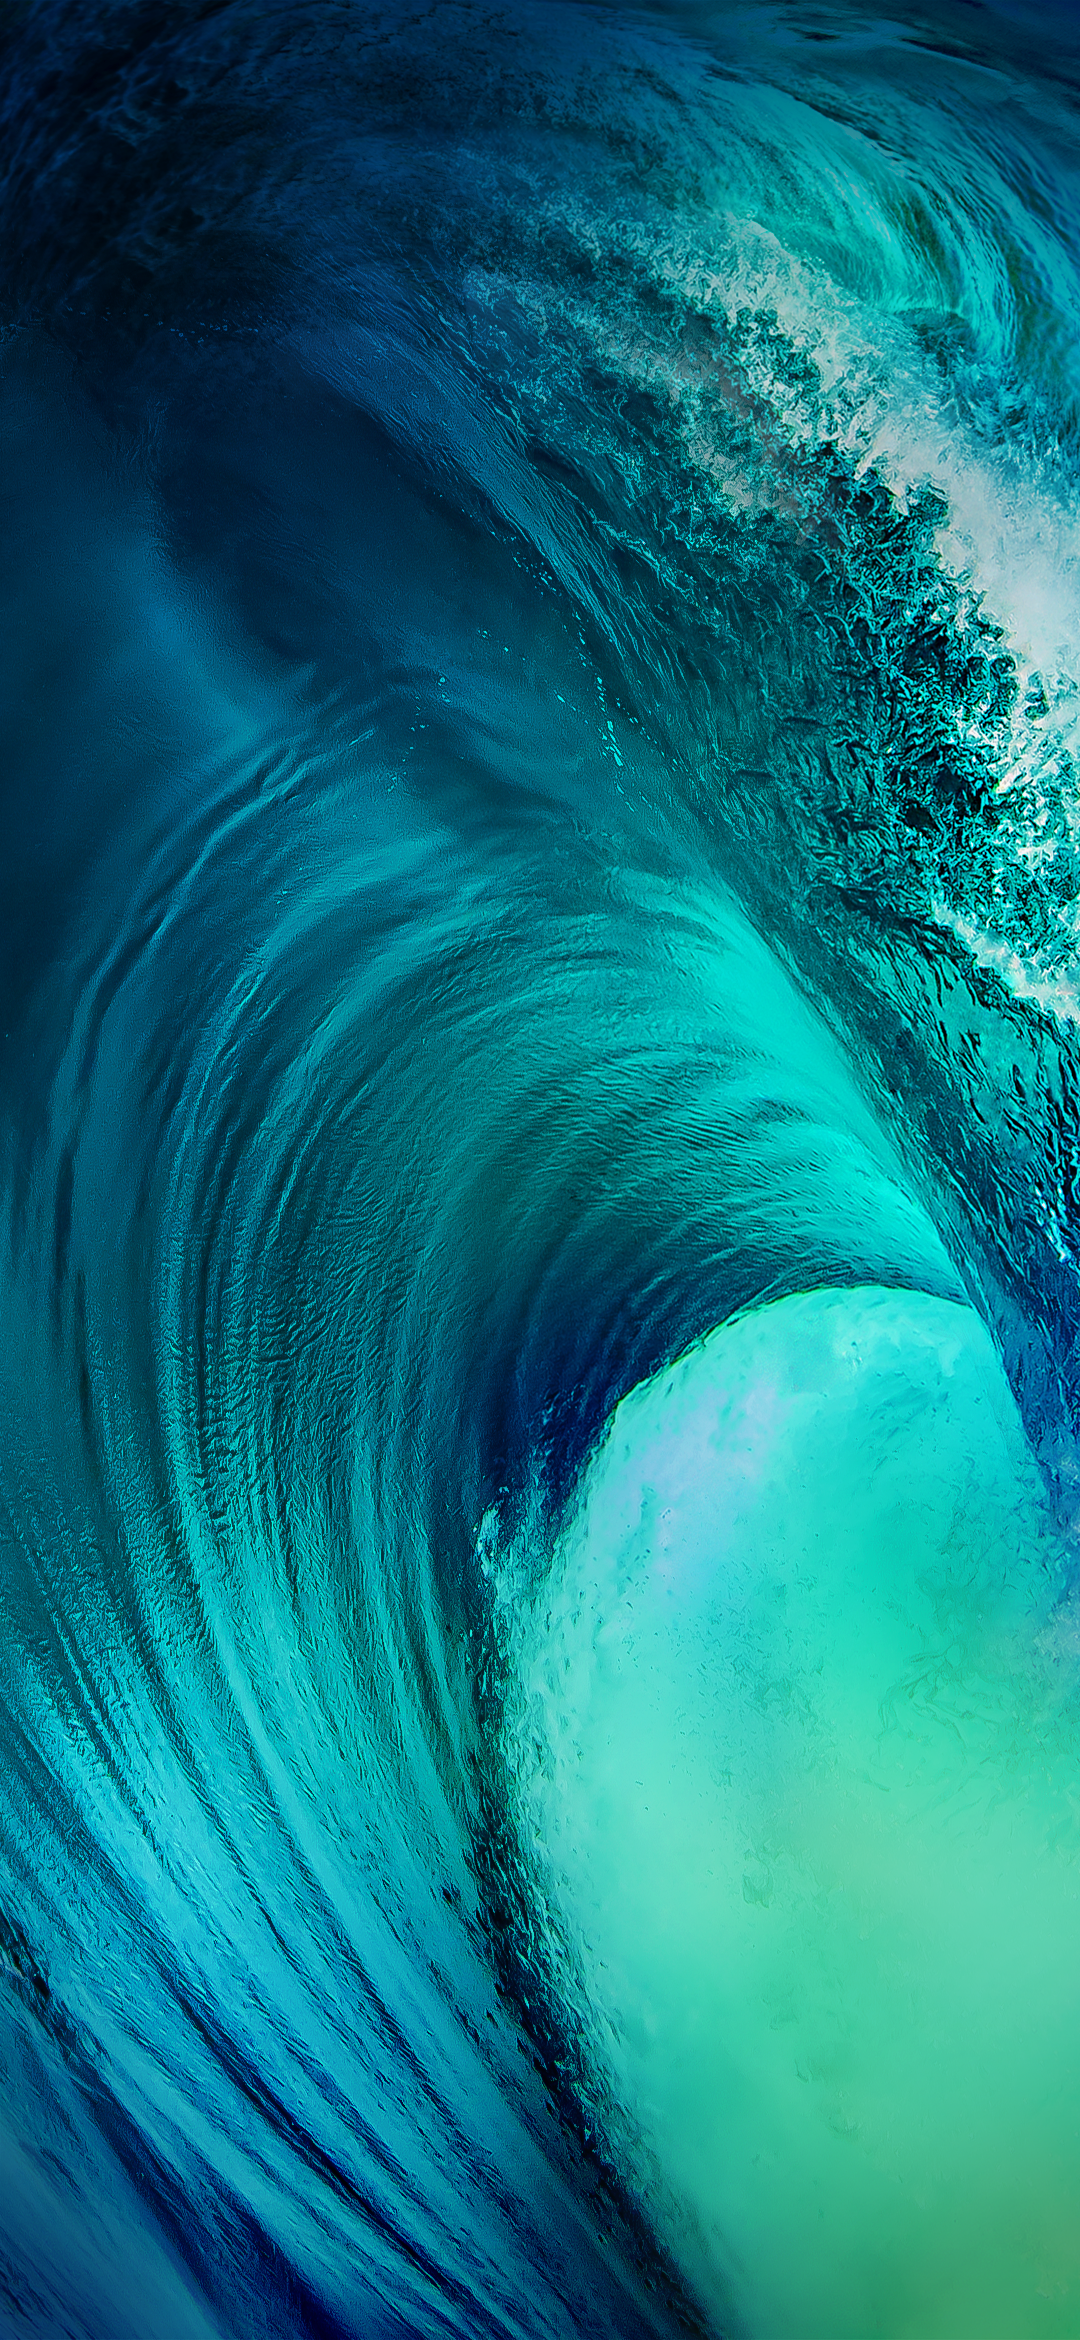 fond d'écran vivo,vague,bleu,aqua,l'eau,turquoise